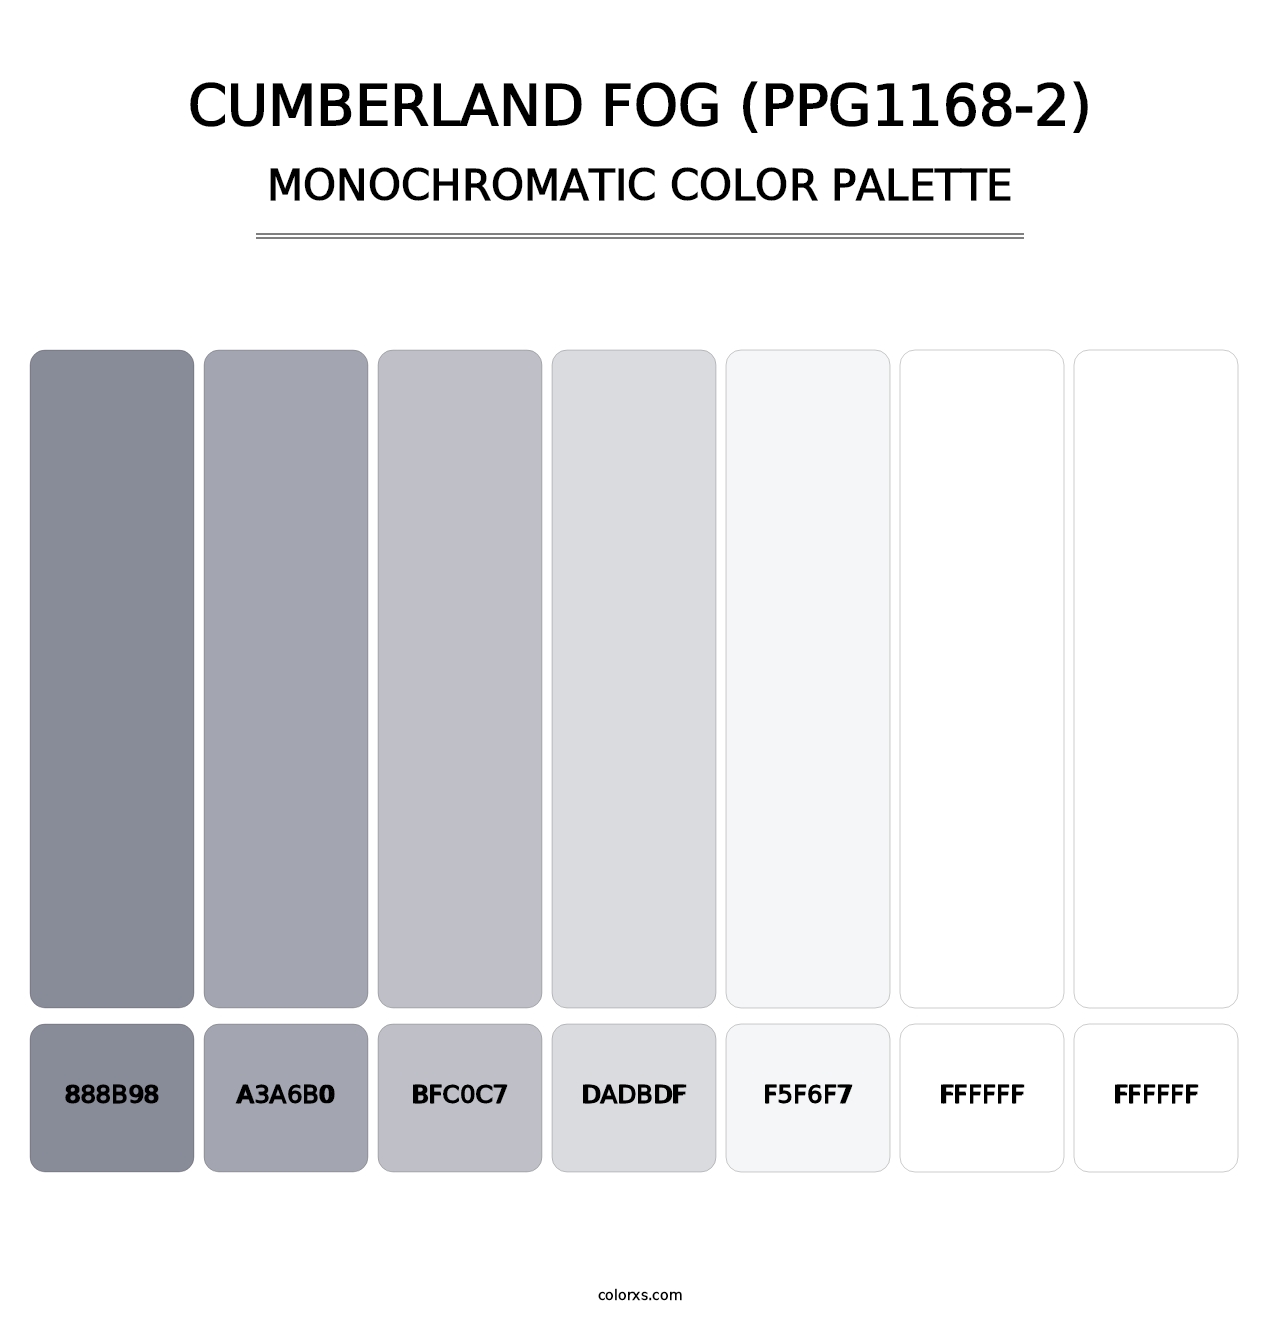 Cumberland Fog (PPG1168-2) - Monochromatic Color Palette